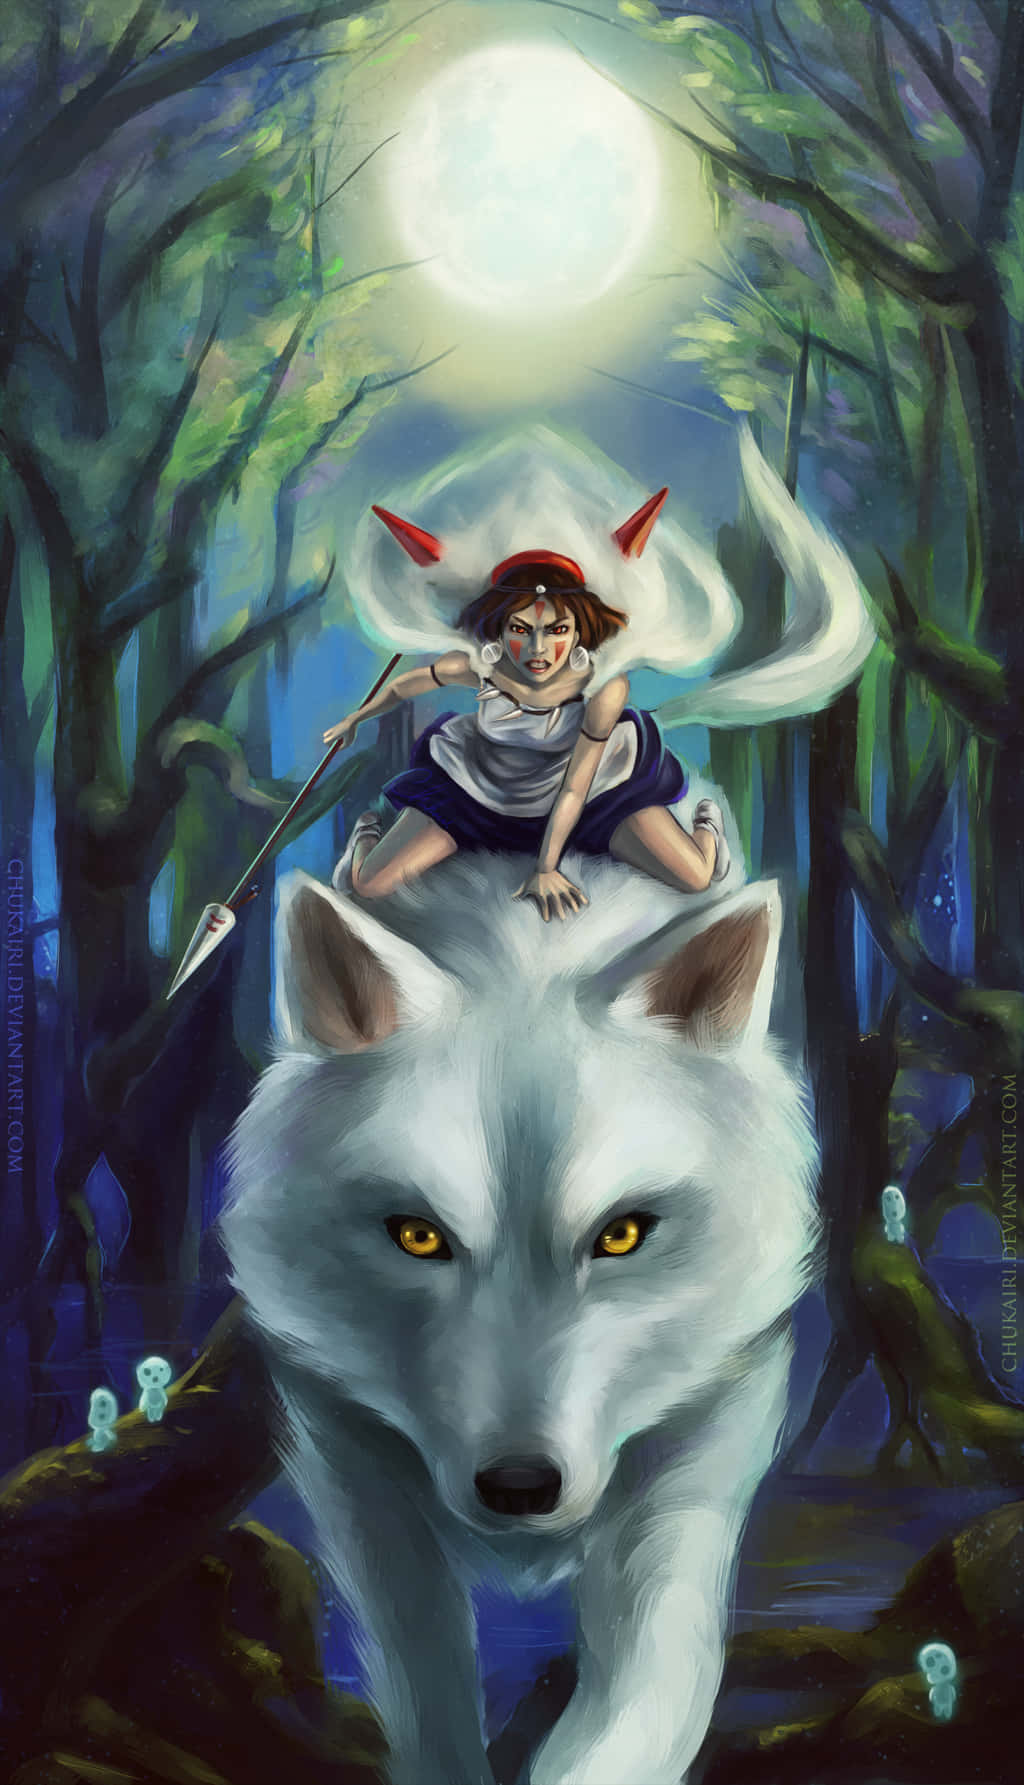 "The Forest Spirit of Princess Mononoke"